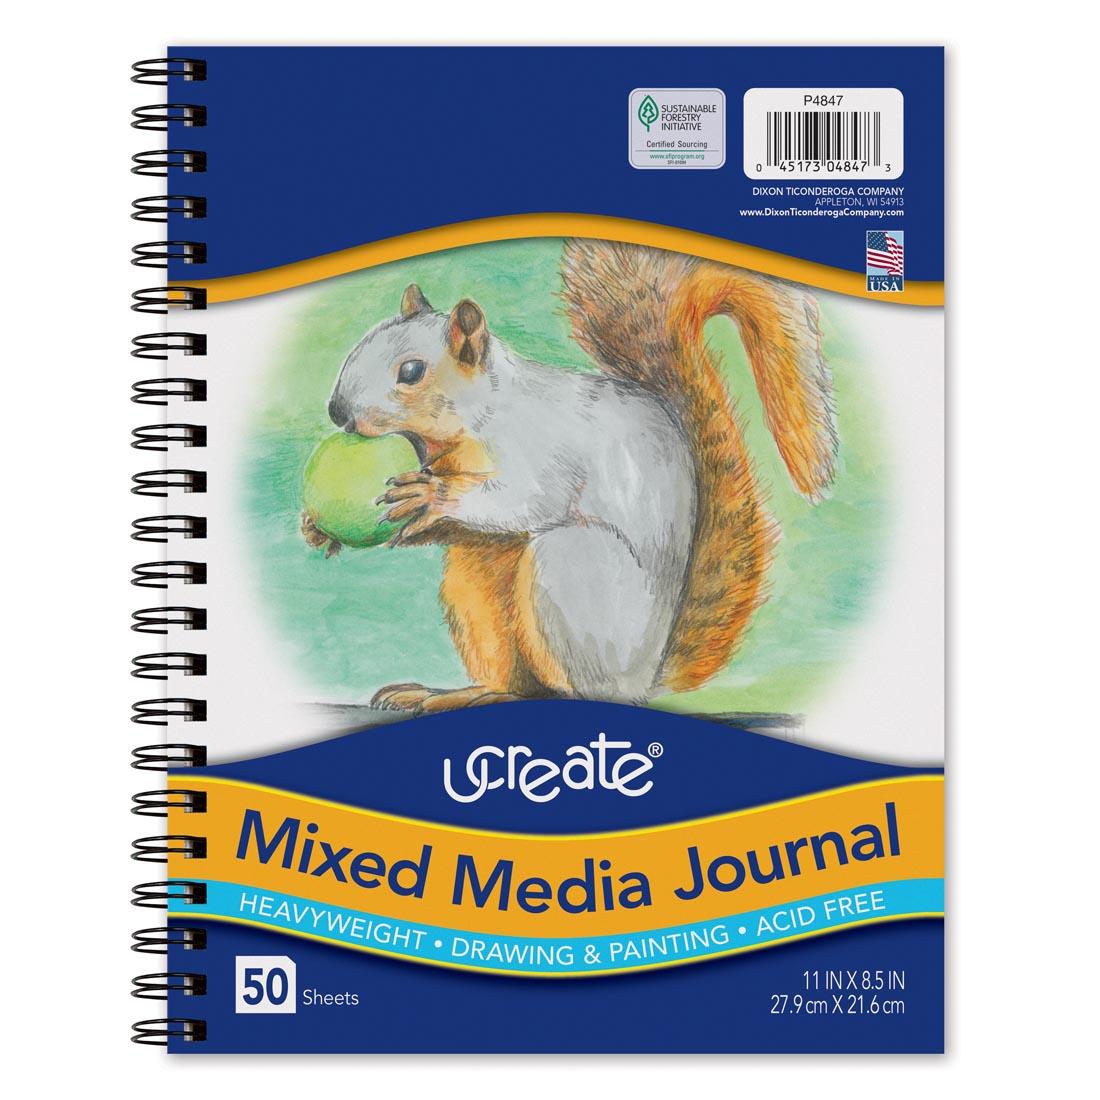 UCreate Mixed Media Journal